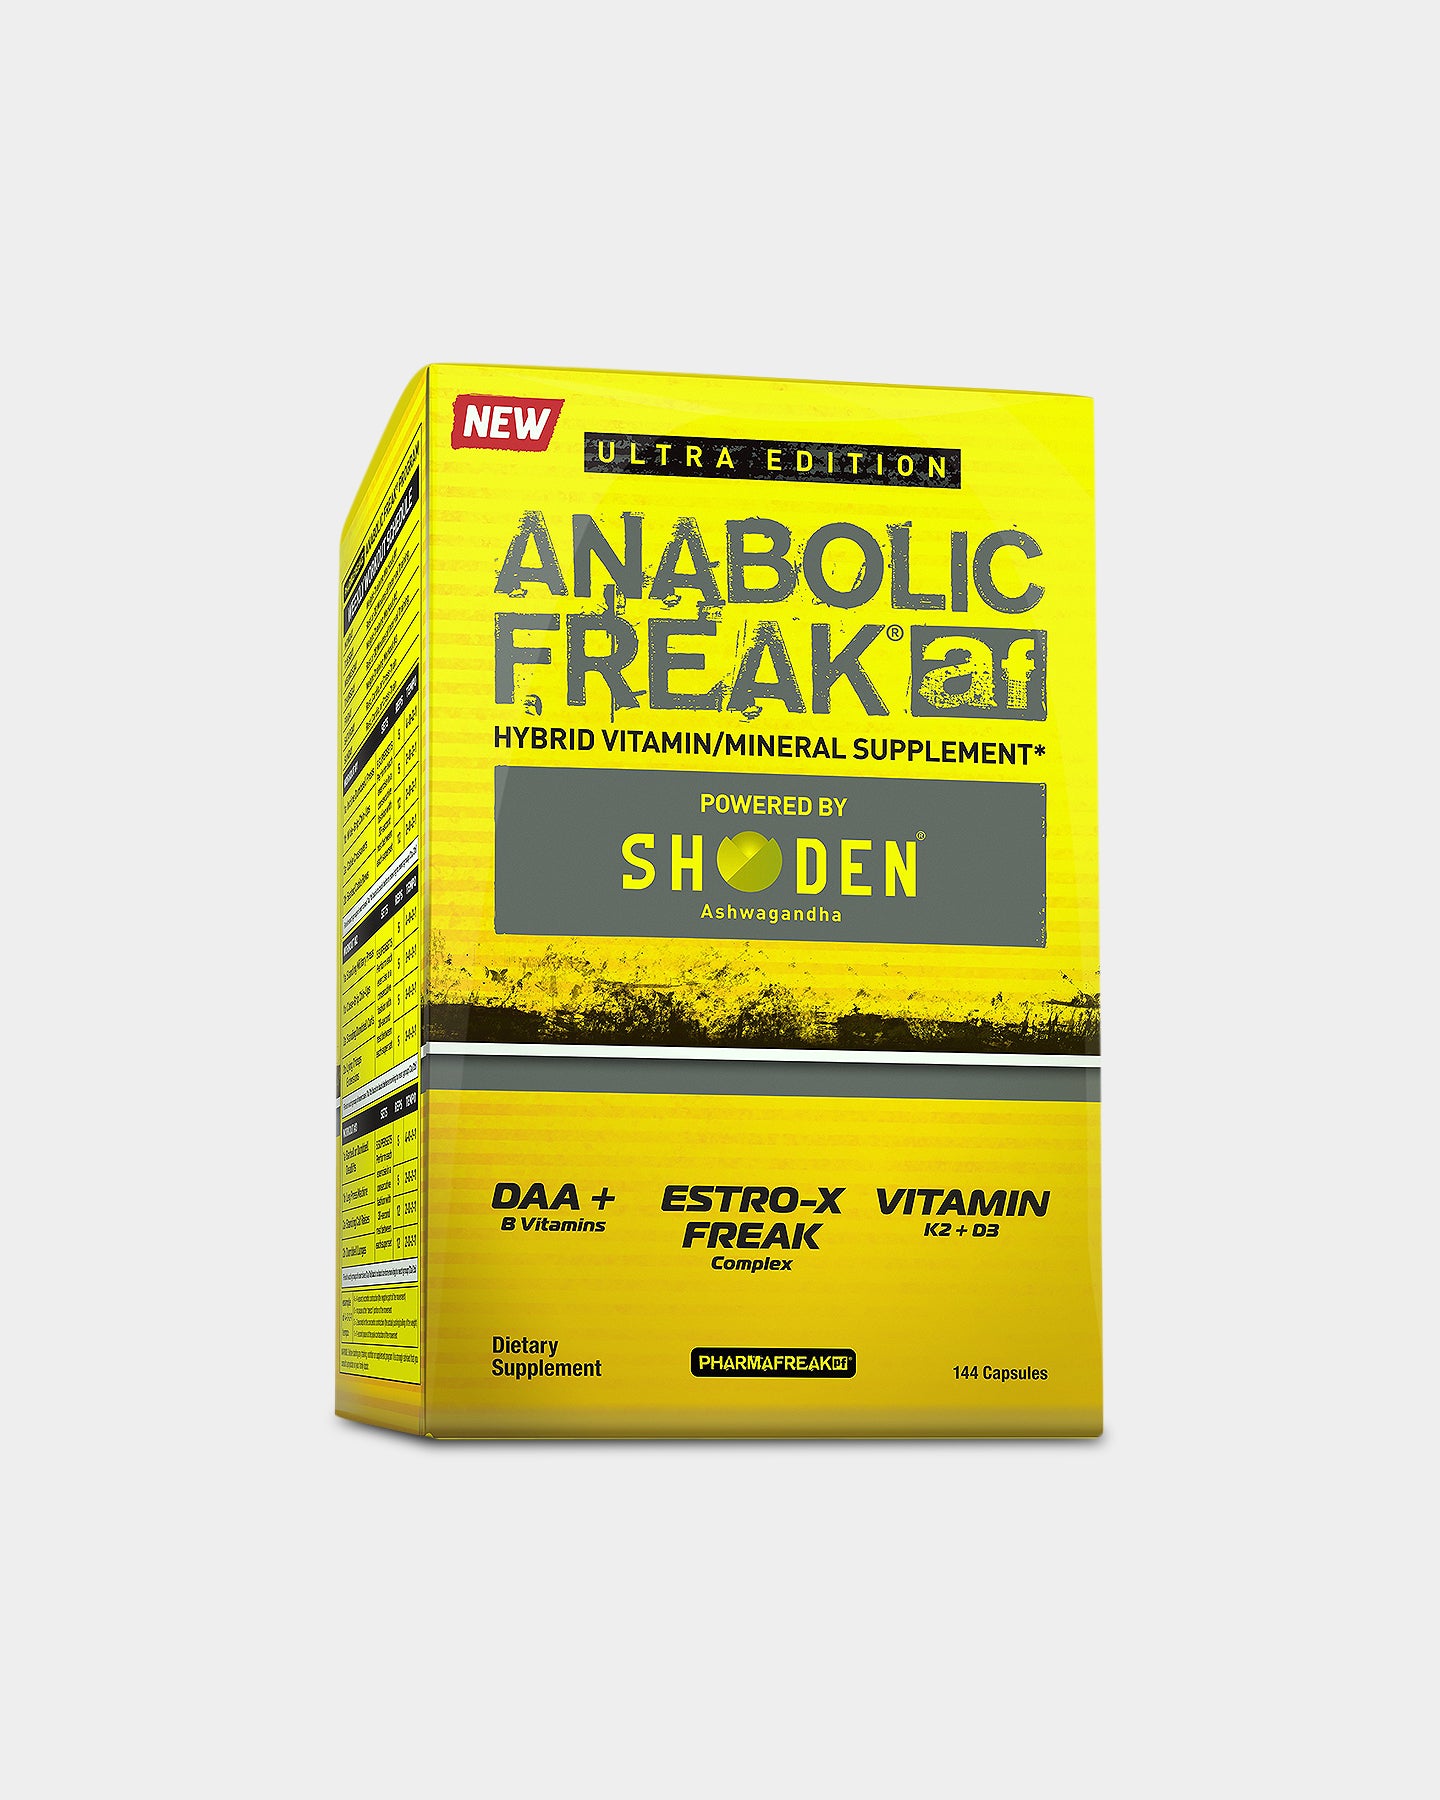 PharmaFreak Anabolic Freak Ultra Edition Testosterone Booster A1